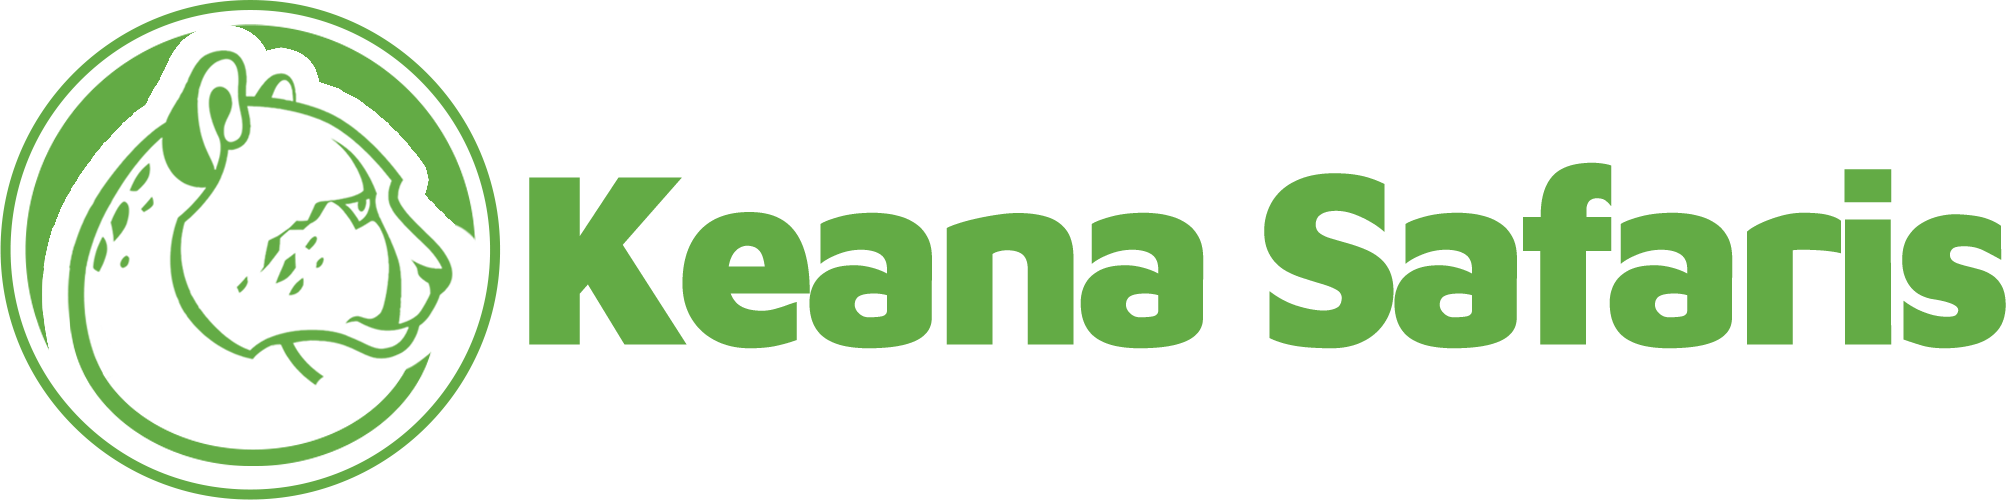 Keana Safaris Logo